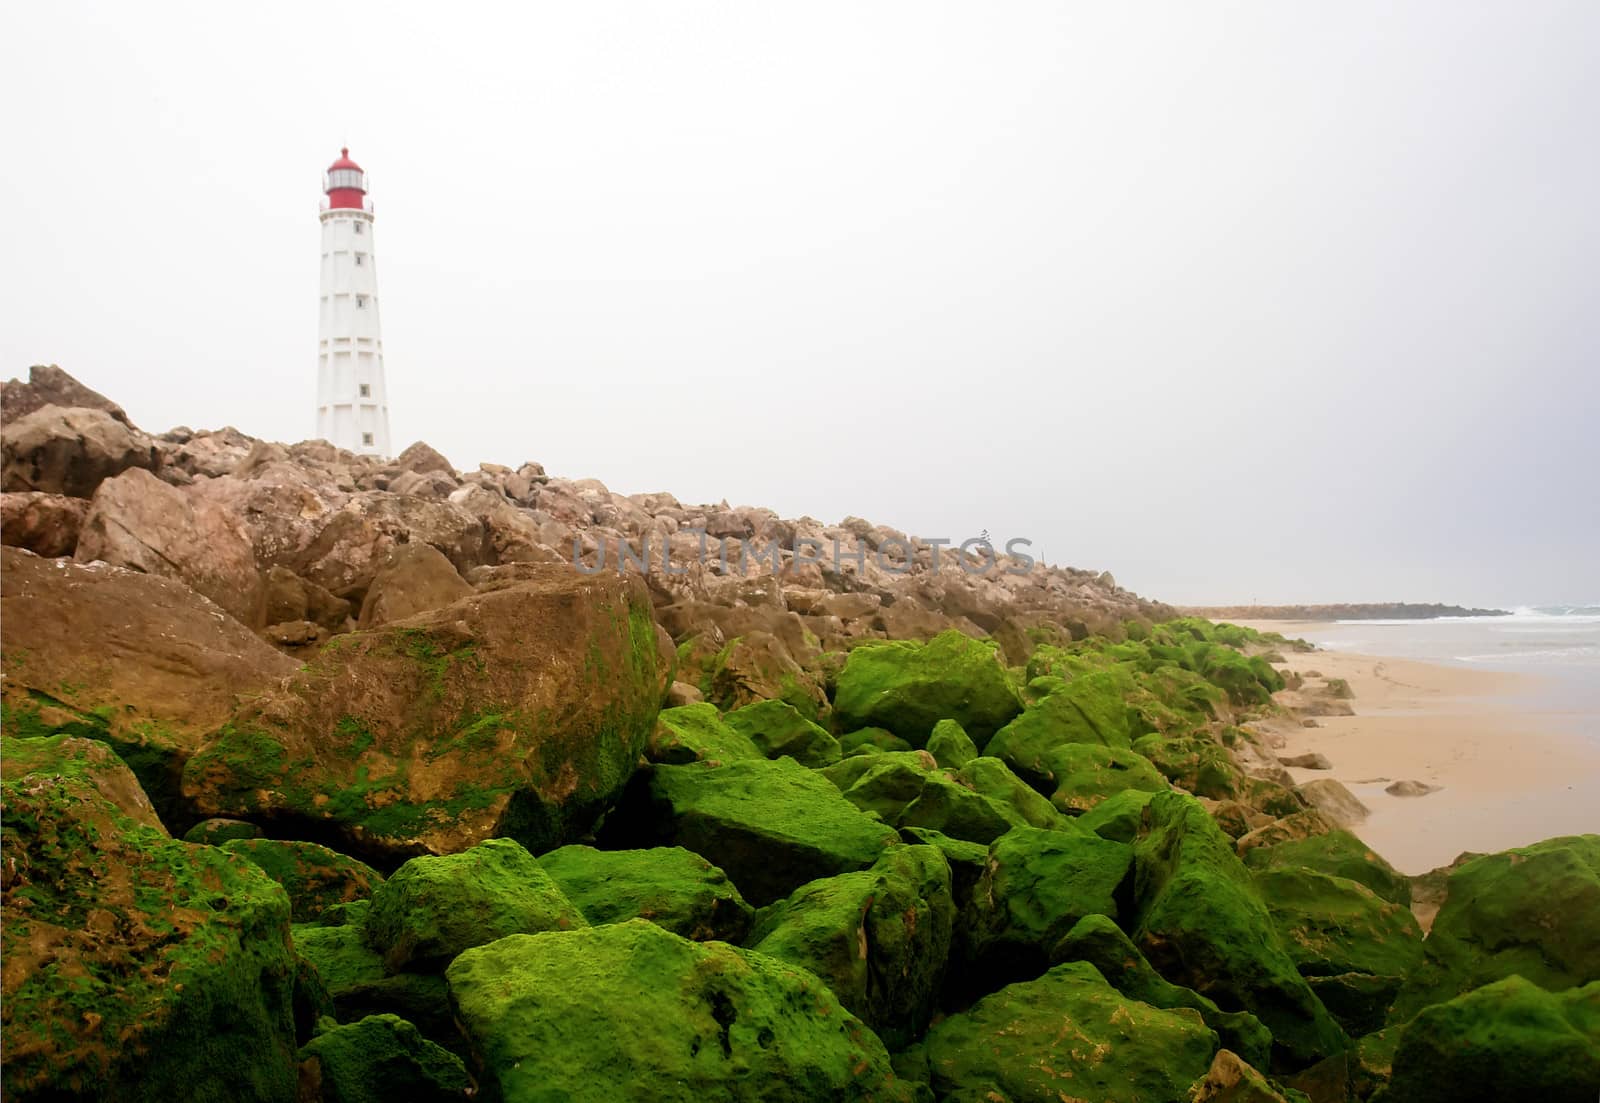 Lighthouse in "Farol" island, in Ria Formosa, natural conservation region in Algarve, Portugal. 